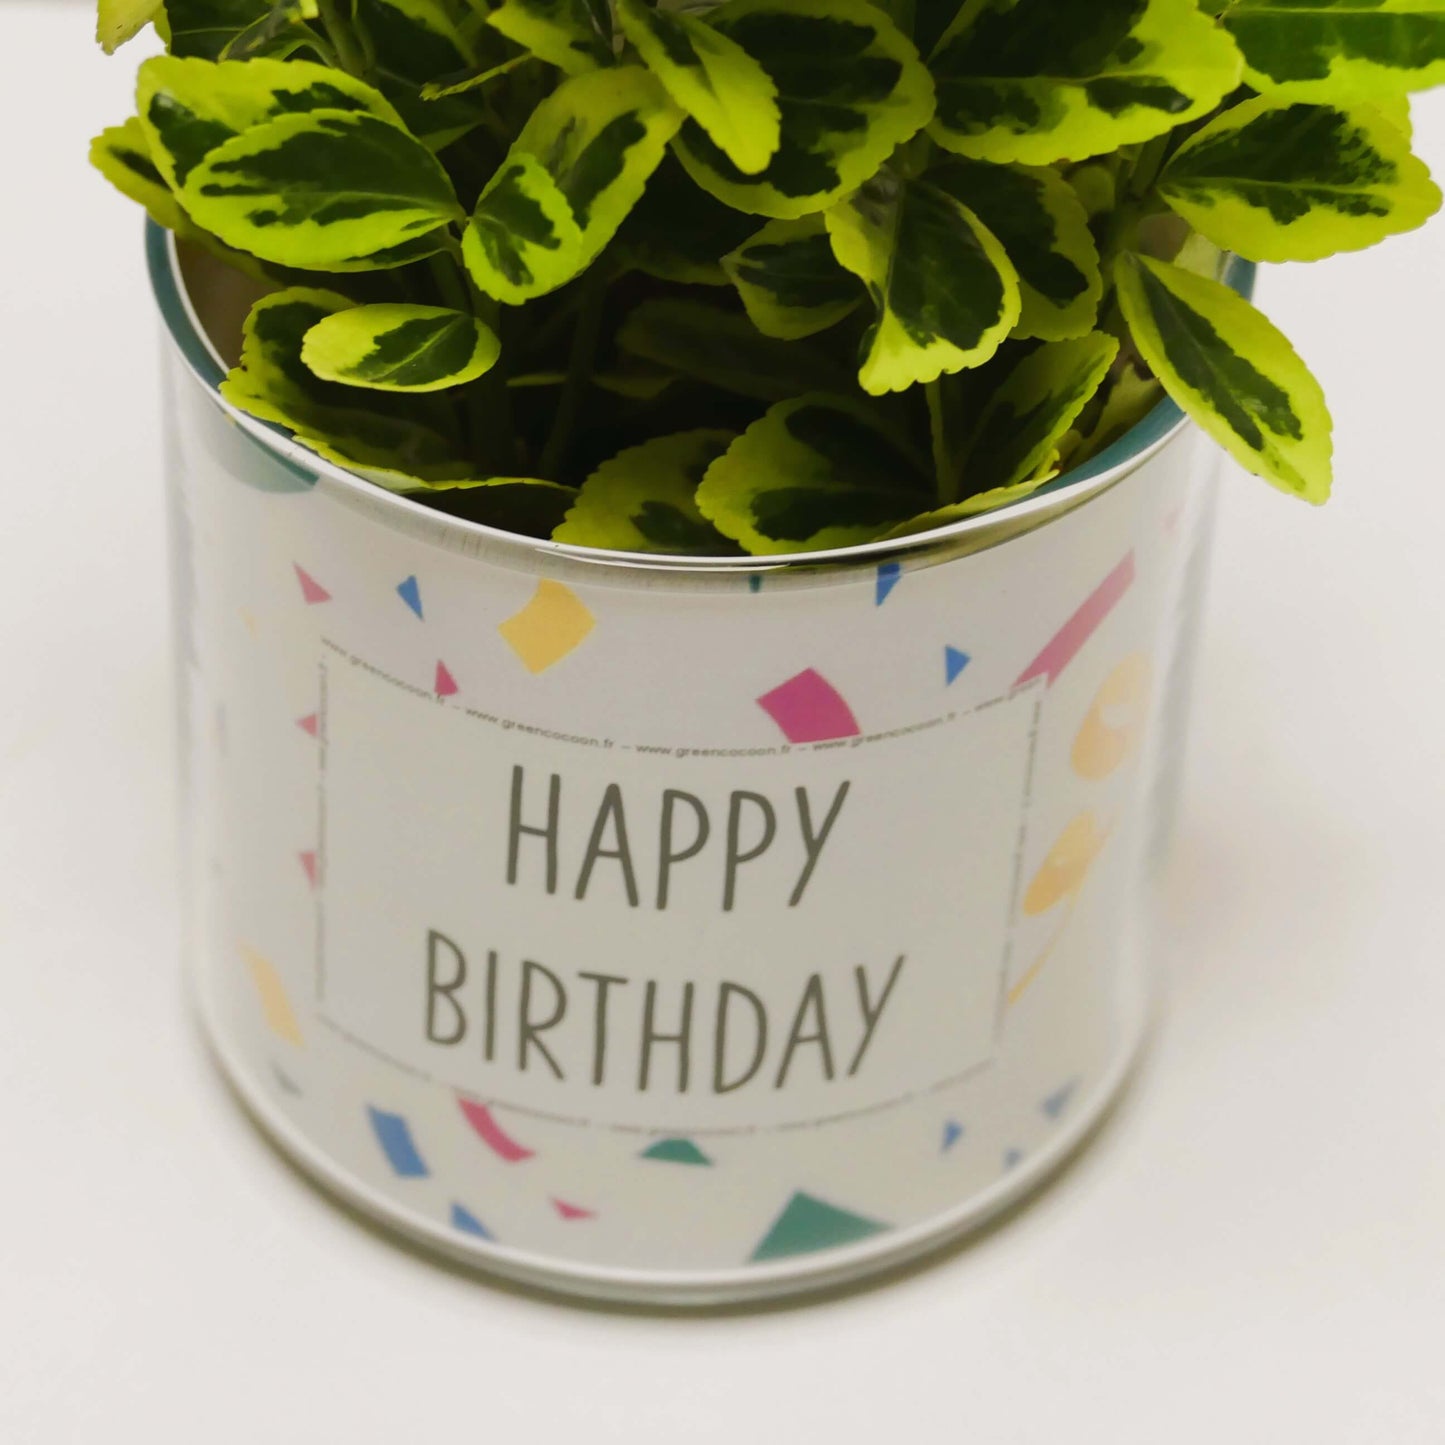 Pot Happy birthday et sa plante